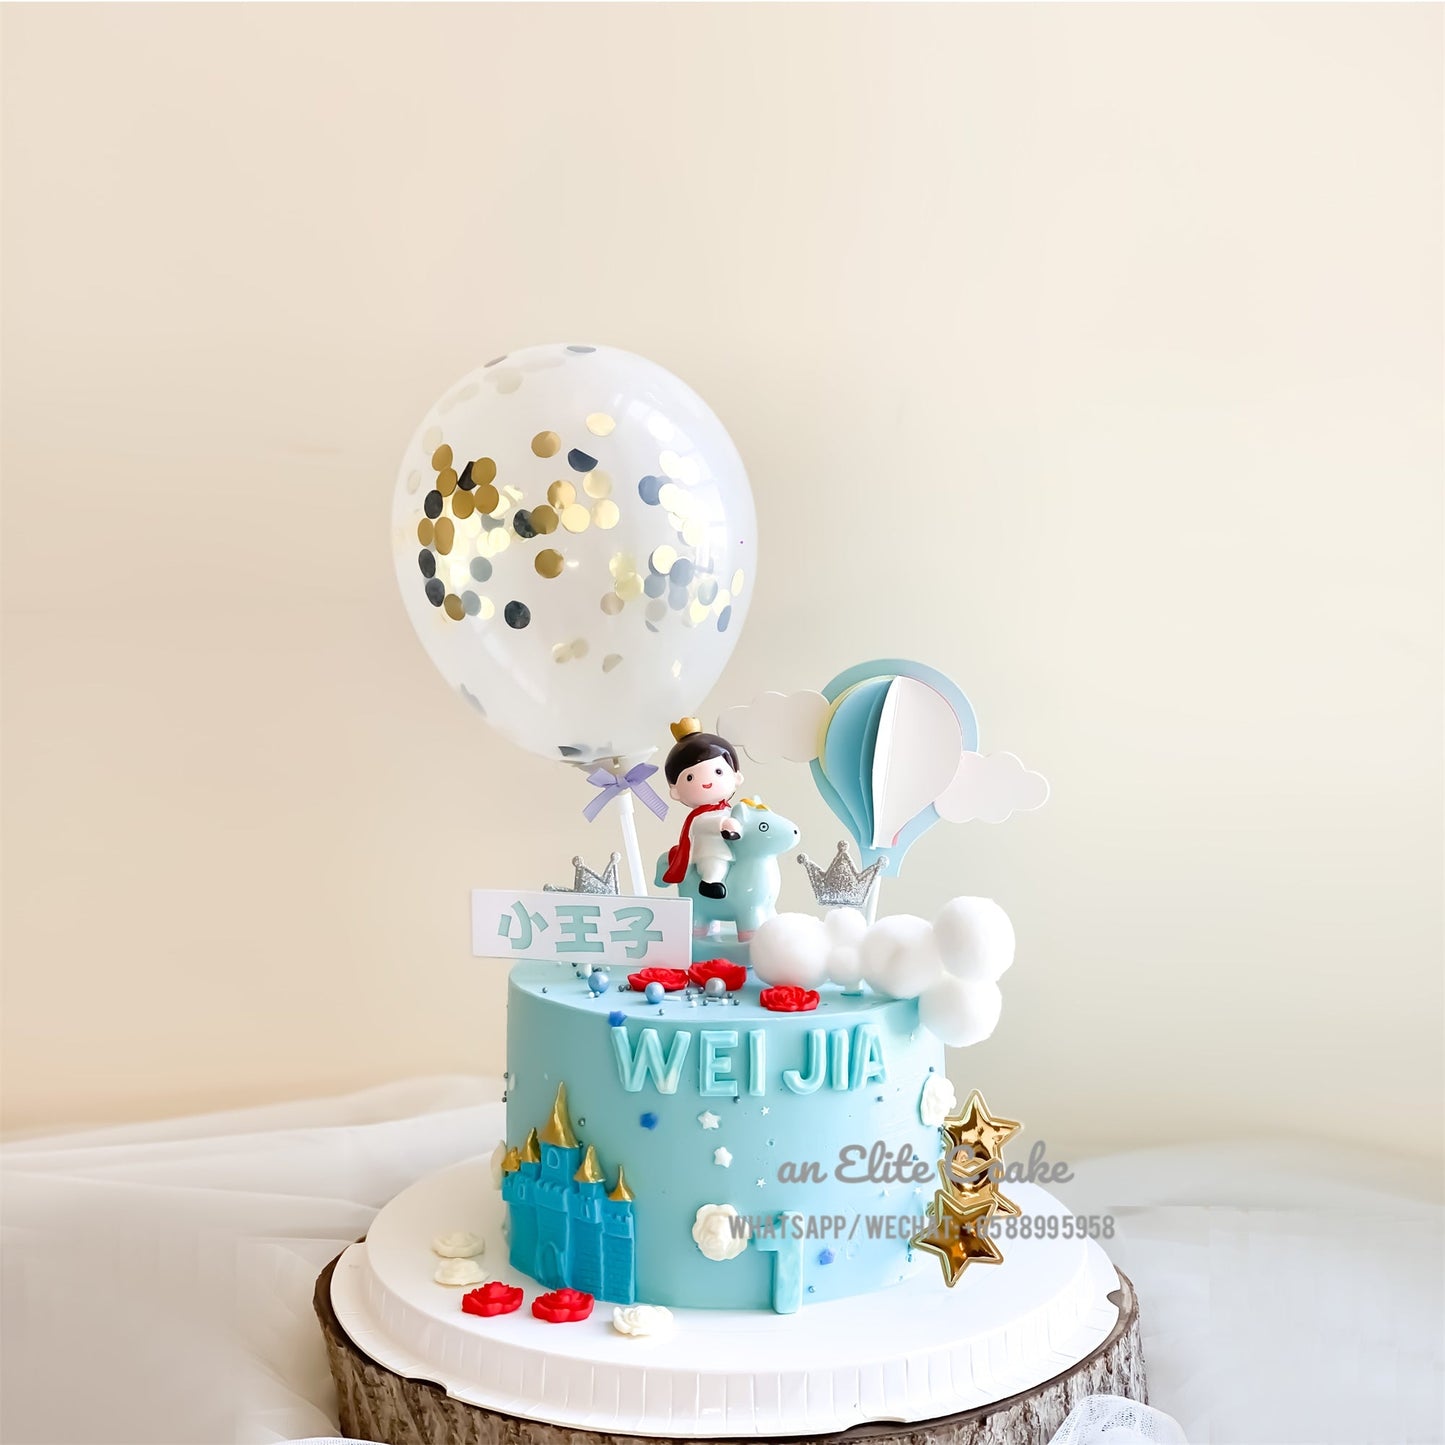 Little Prince Inspired Cake: Cloud Celebration